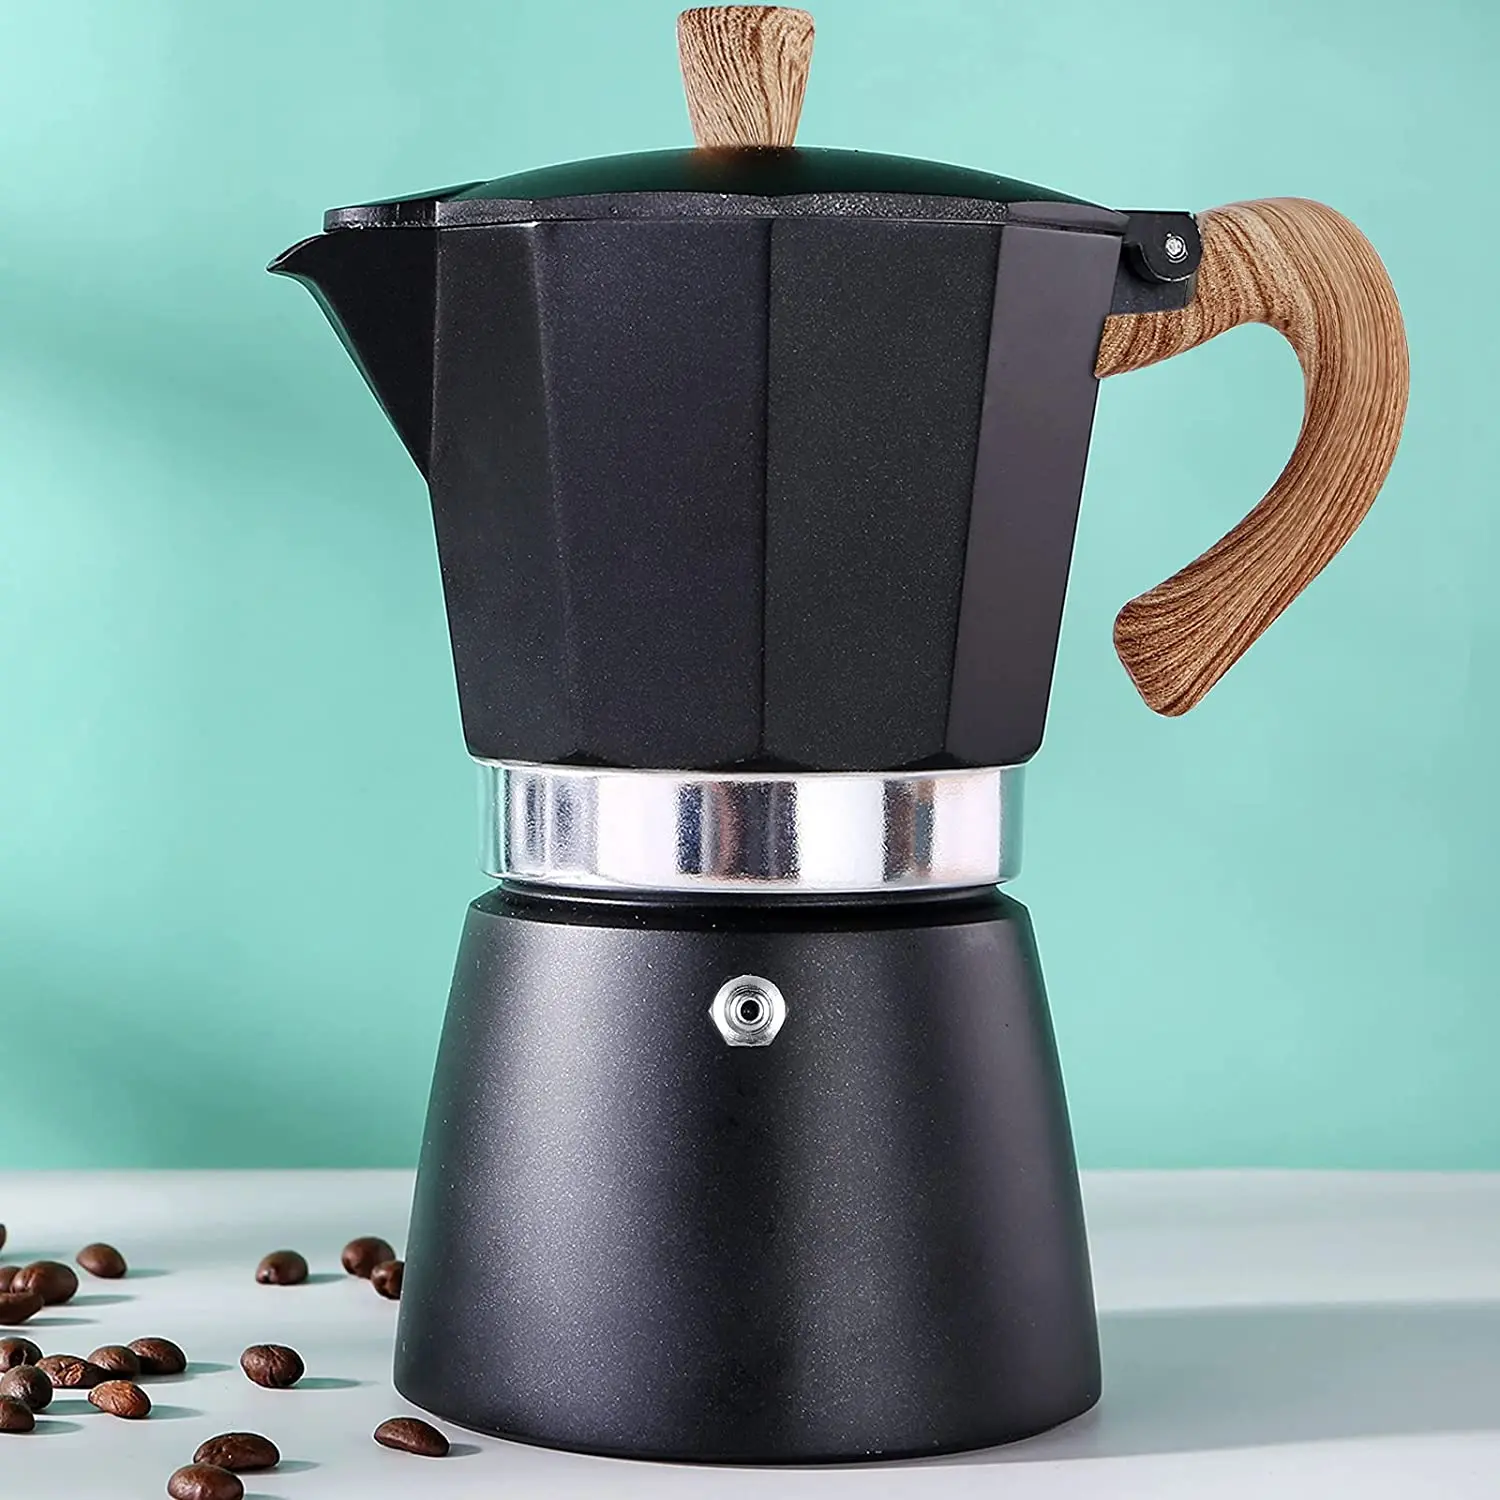 https://ae01.alicdn.com/kf/S276409aaed9744778a8b81c0fe8f6c28Q/Stovetop-Espresso-Maker-Moka-Pot-Manual-Cuban-Coffee-Percolator-Machine-Aluminum-Espresso-Greca-Coffee-Maker-Brewer.jpg